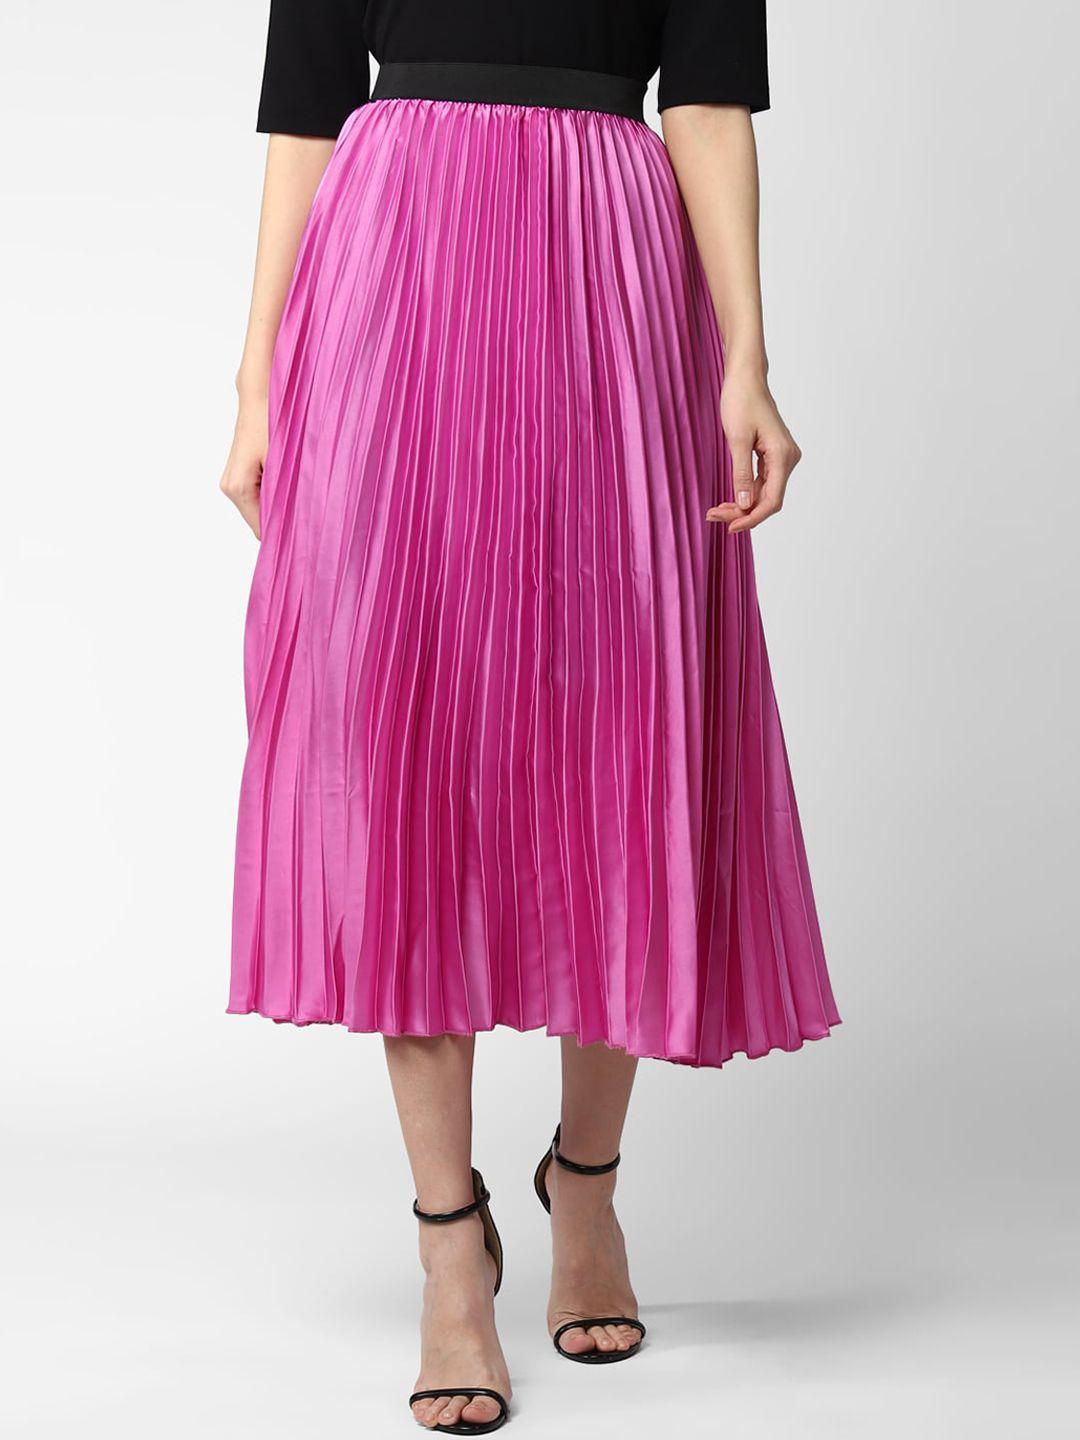 stylestone-women-lavender-coloured-solid-accordion-pleated-flared-midi-skirt